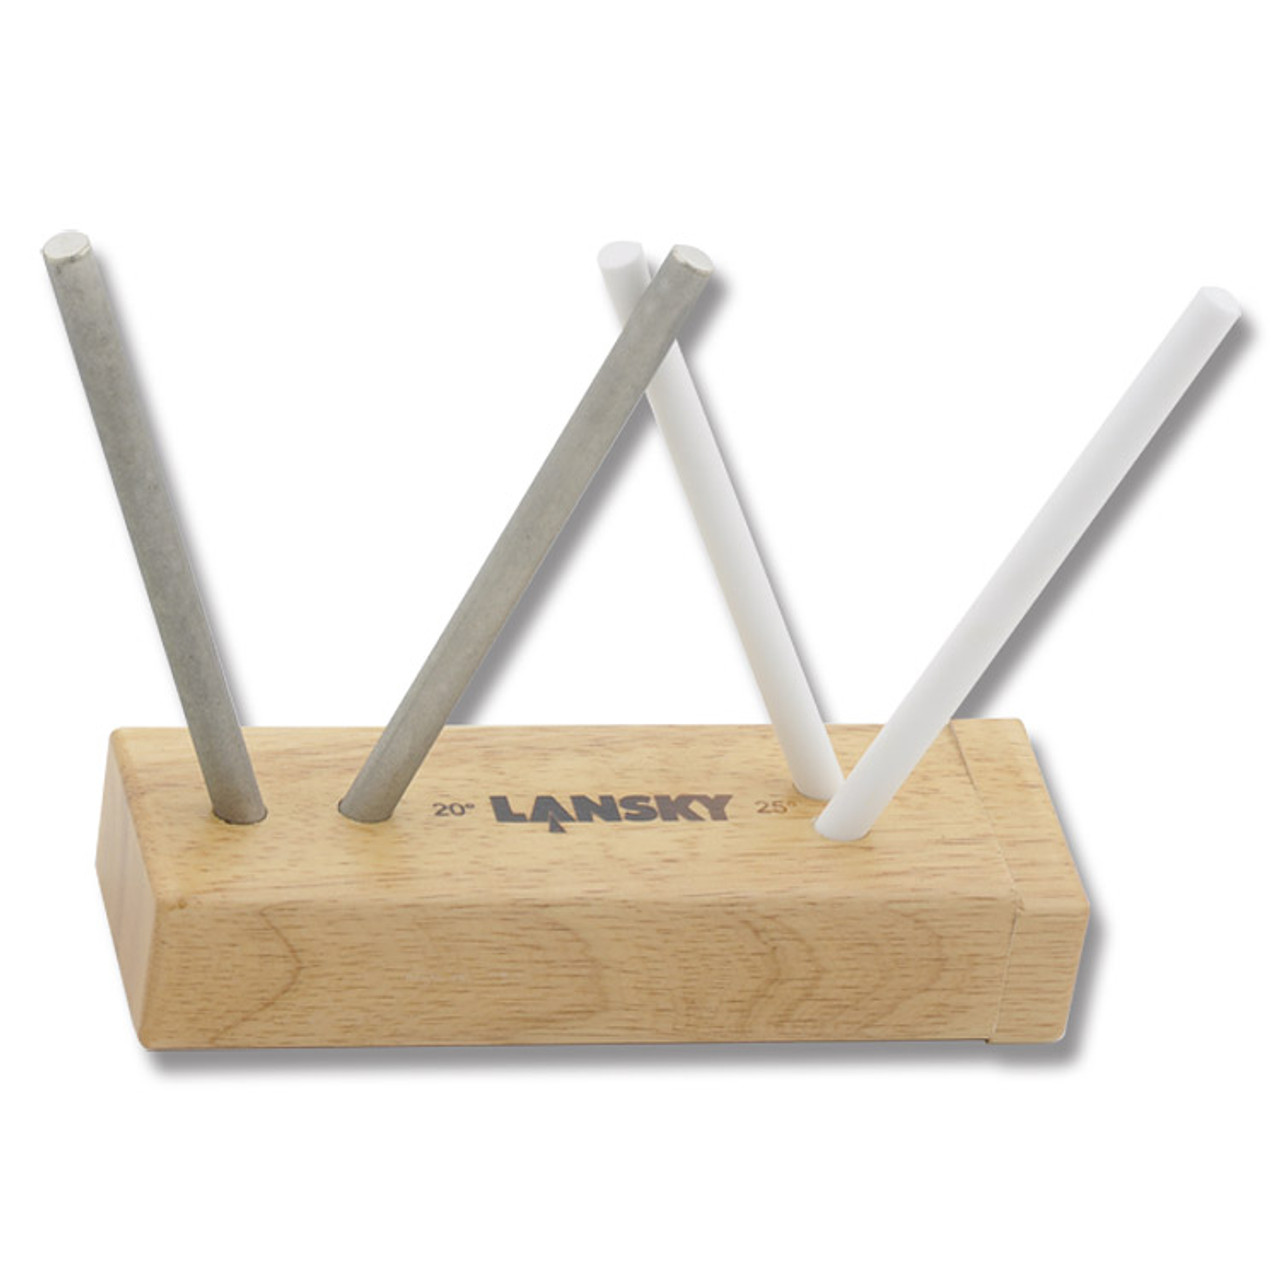 Lansky Diamond/Ceramic Turn Box 4-Rod Knife Sharpening System - TB2D2C